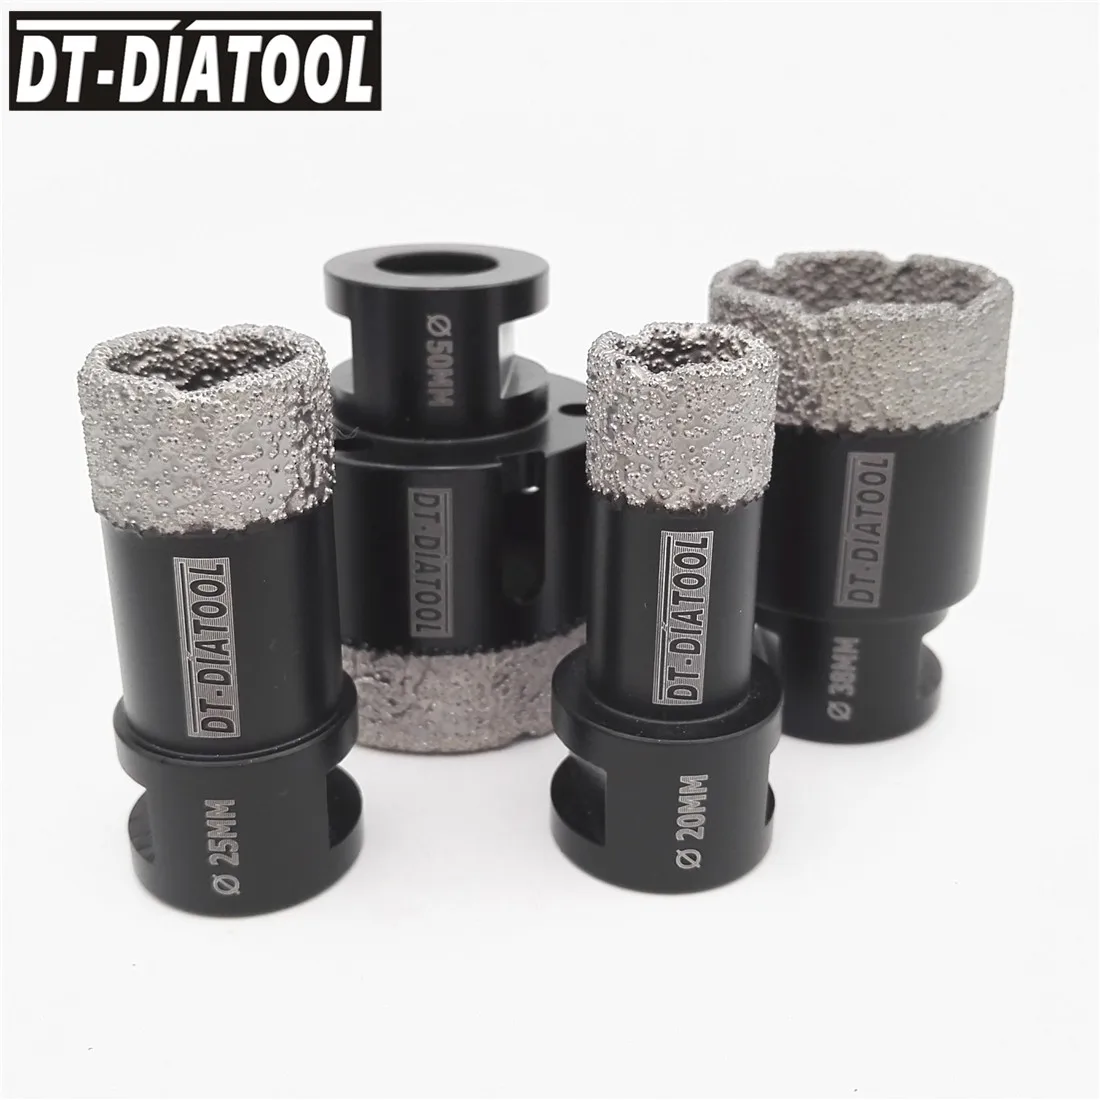 DT-DIATOOL 4pcs Dry Vacuum Brazed Diamond Drilling Core Bits Hole Saw for Ceramic Tile Drill Bits M14 thread Granite Marble